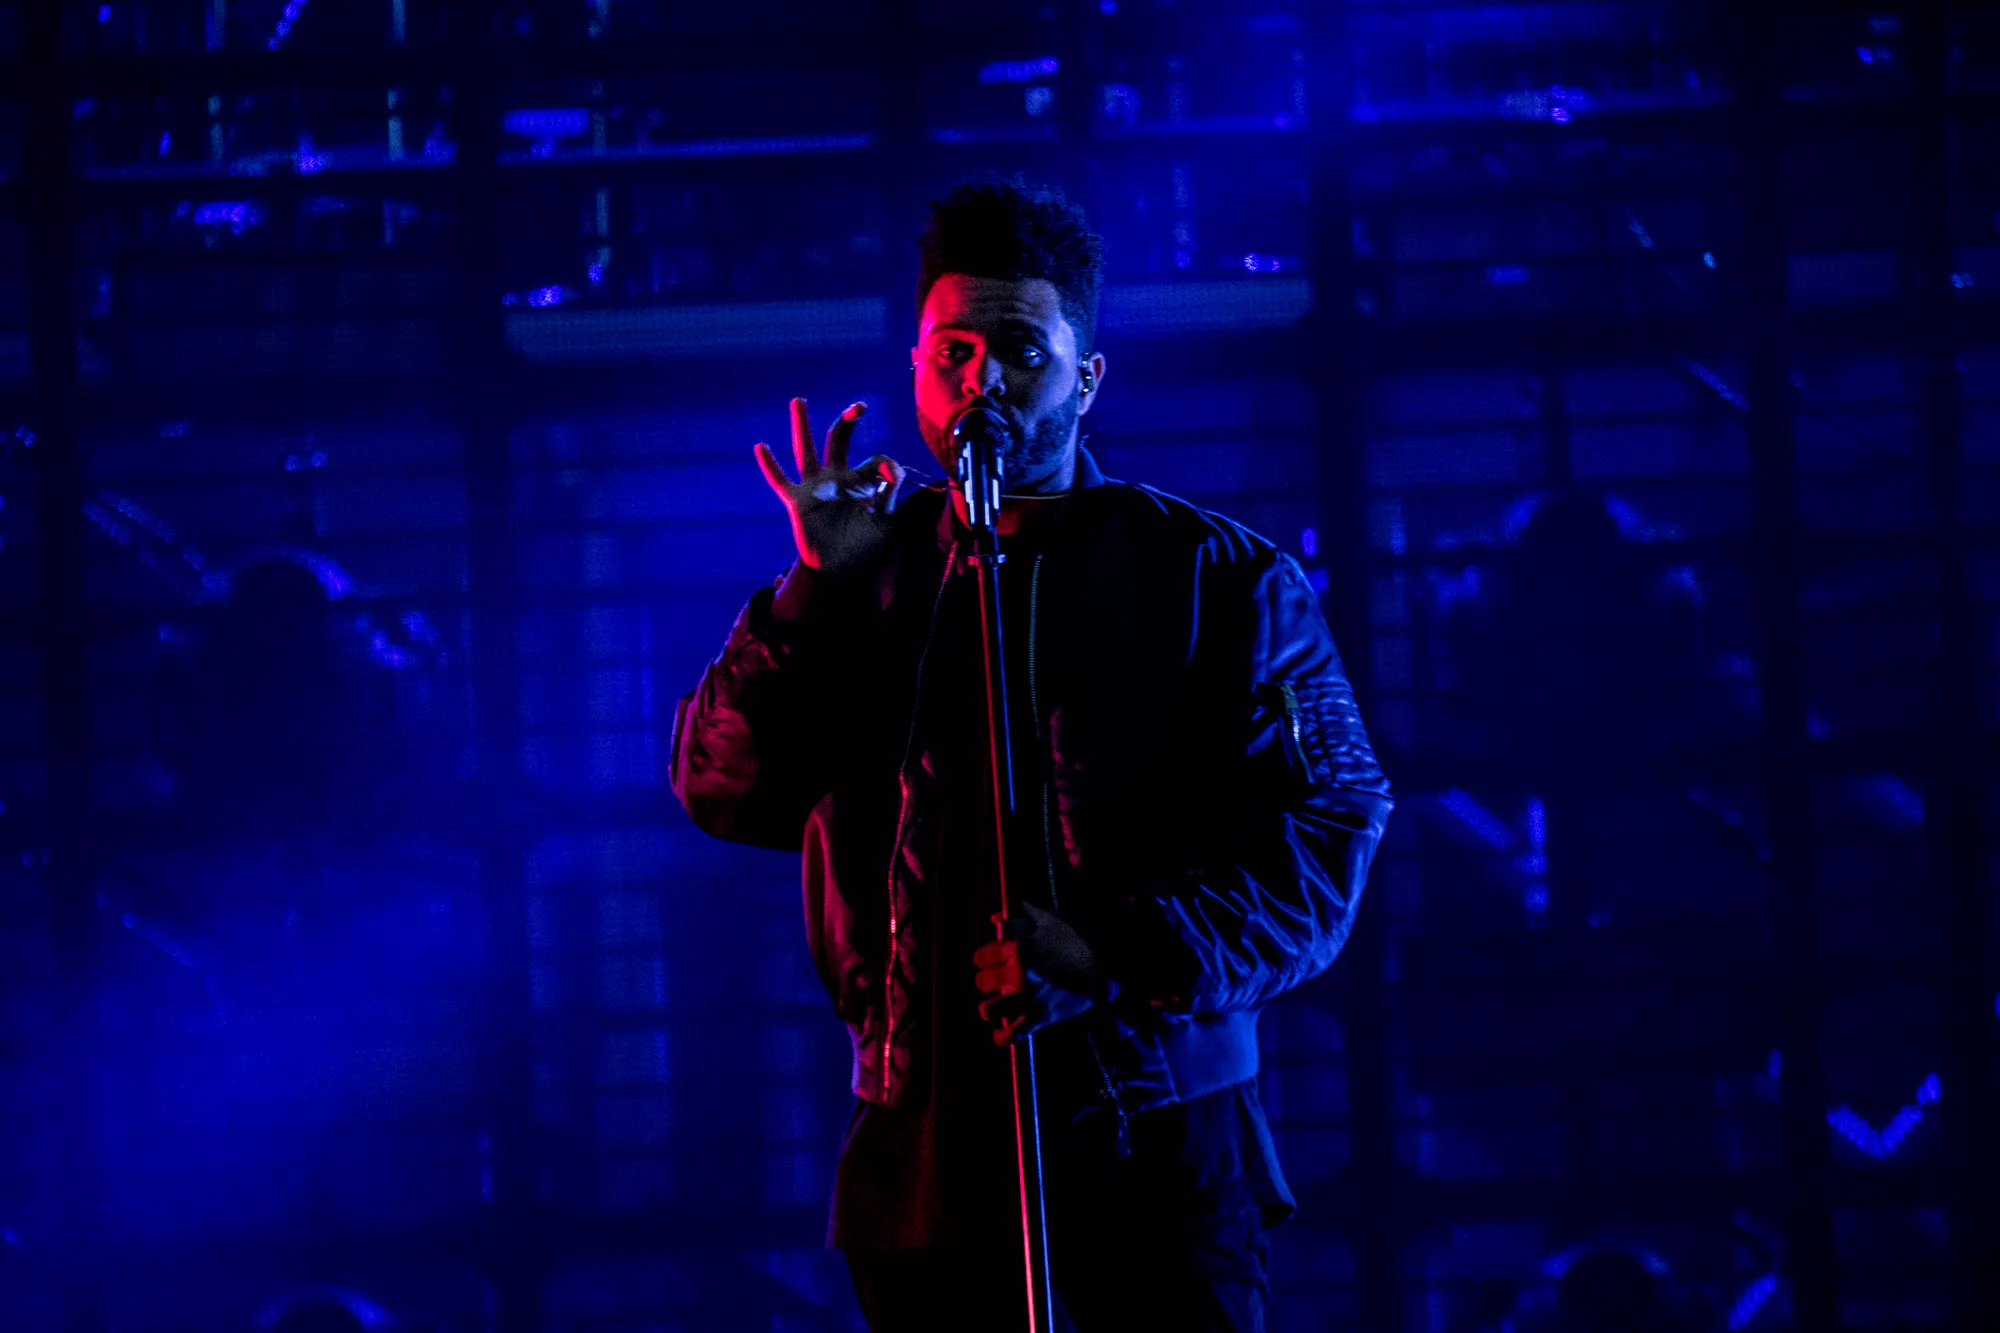 De store låtene til The Weeknd blåste tidvis bort på Orange Scene